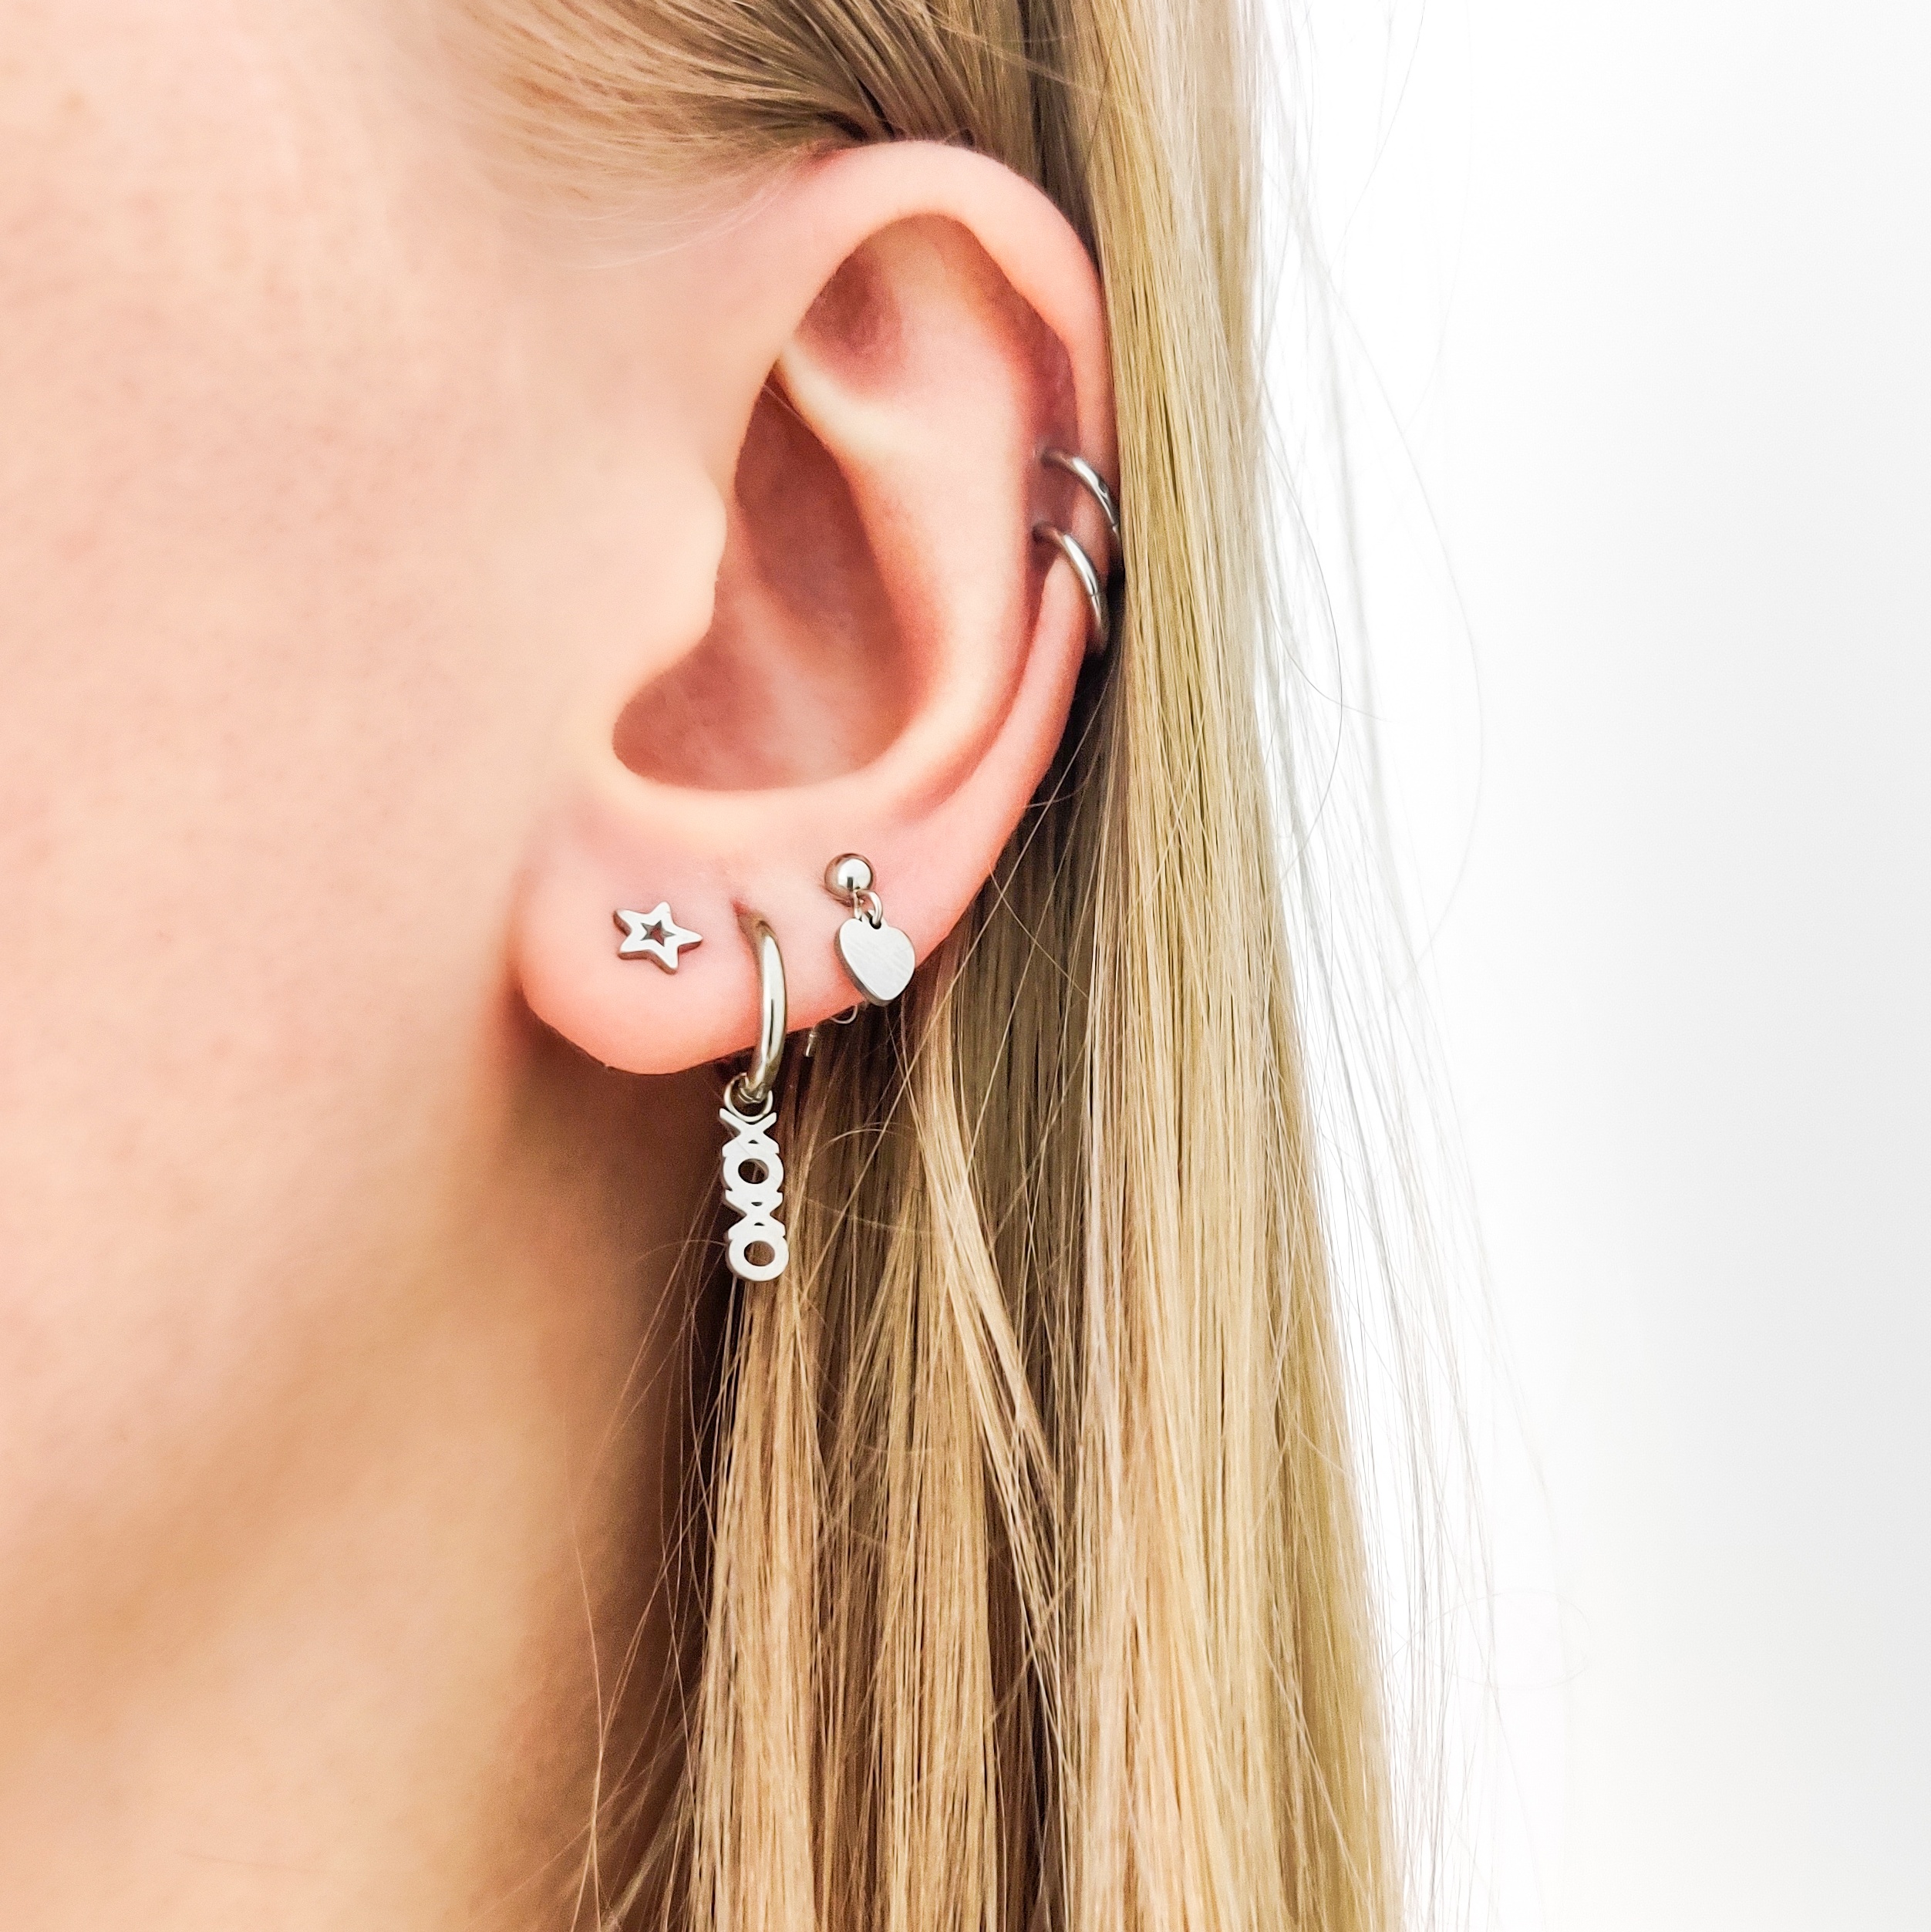 Stud earrings with charm heart